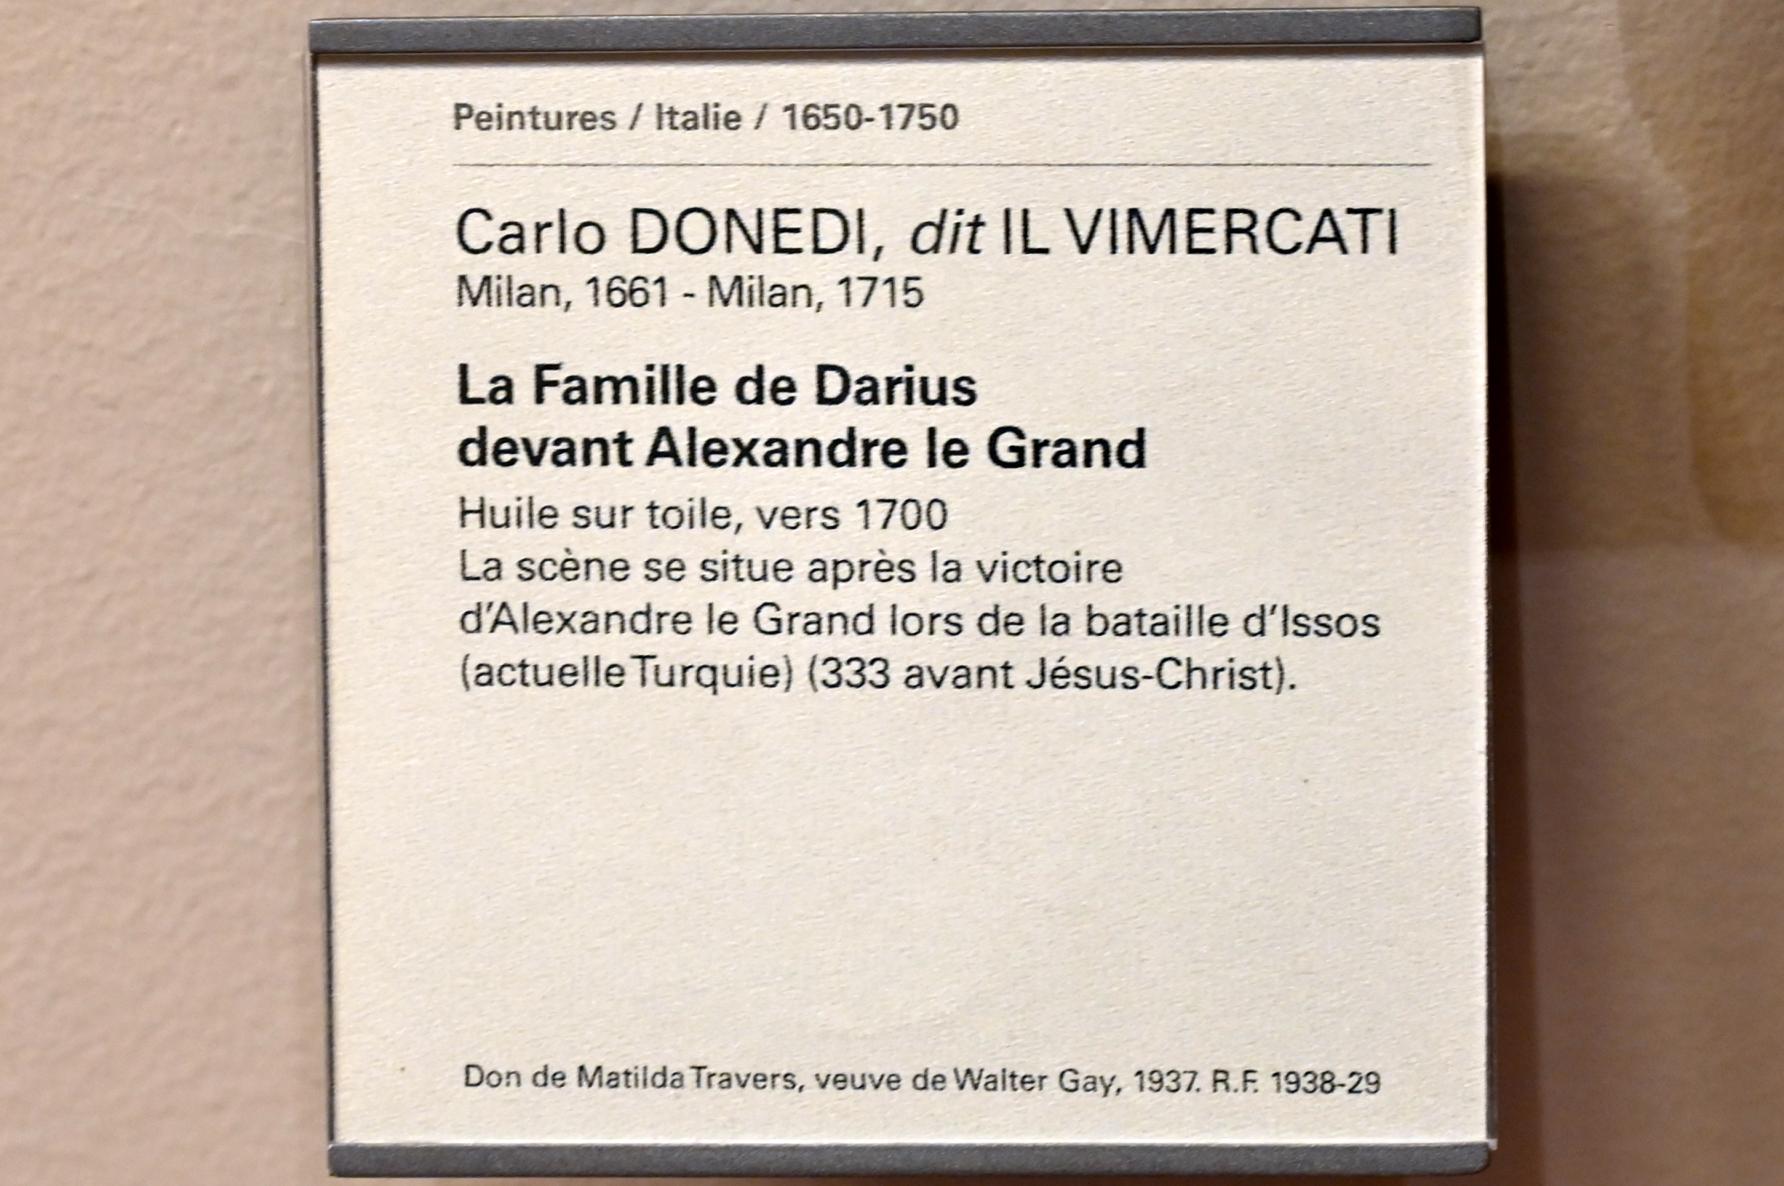 Carlo Donelli (Vimercati) (1700), Die Familie des Darius vor Alexander dem Großen, Paris, Musée du Louvre, Saal 720, um 1700, Bild 2/2